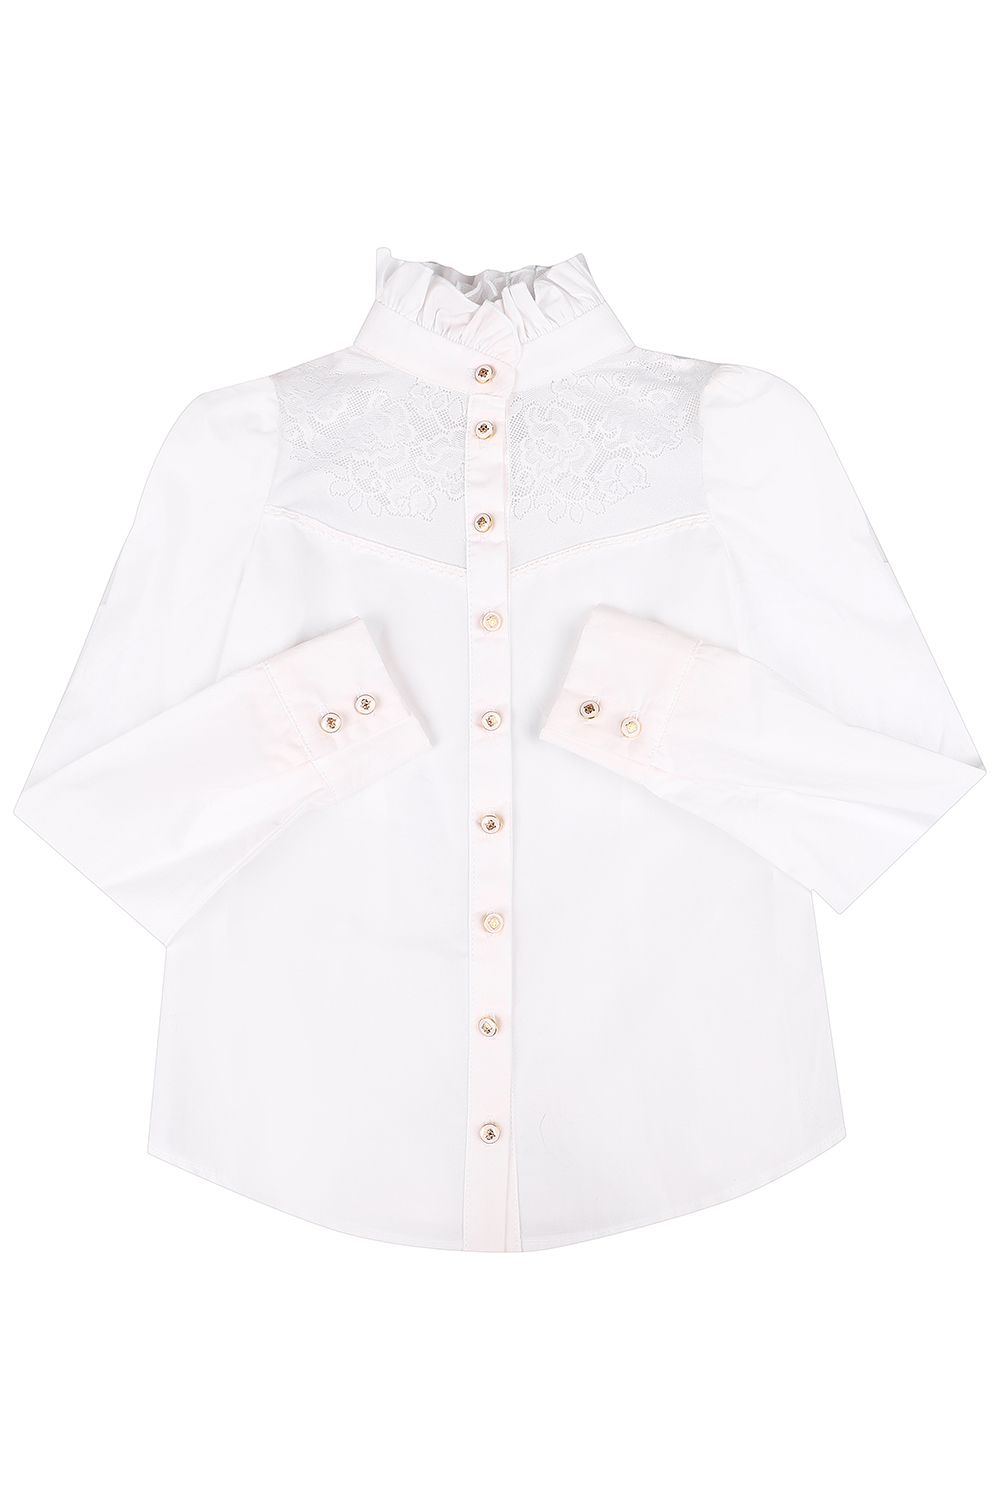 Блуза Маленькая Леди, размер 164, цвет белый 1337/3-519-VXBX - фото 1